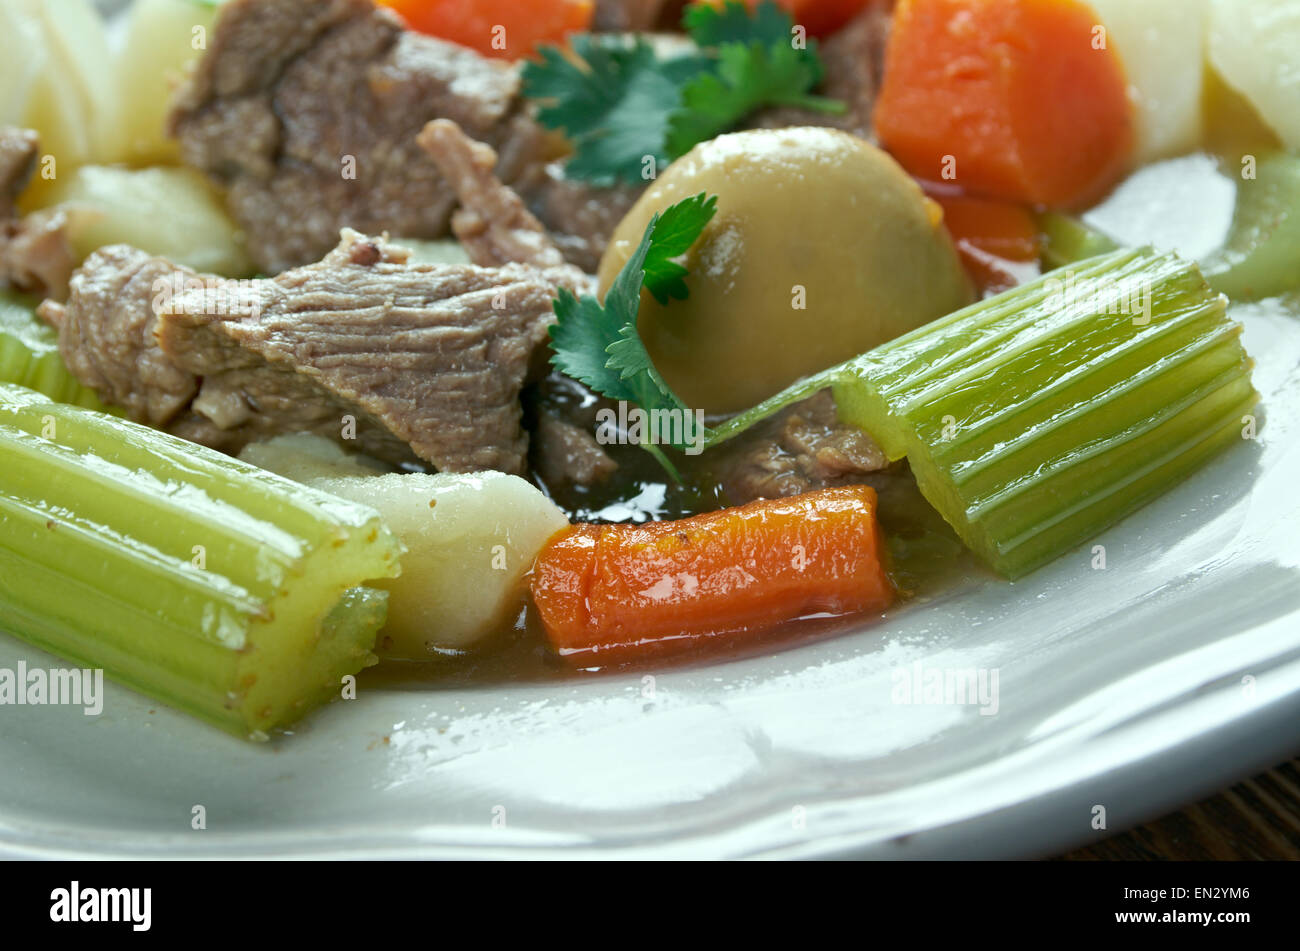 Skirts and kidneys - Irish stew made from pork and pork kidneys. Stock Photo